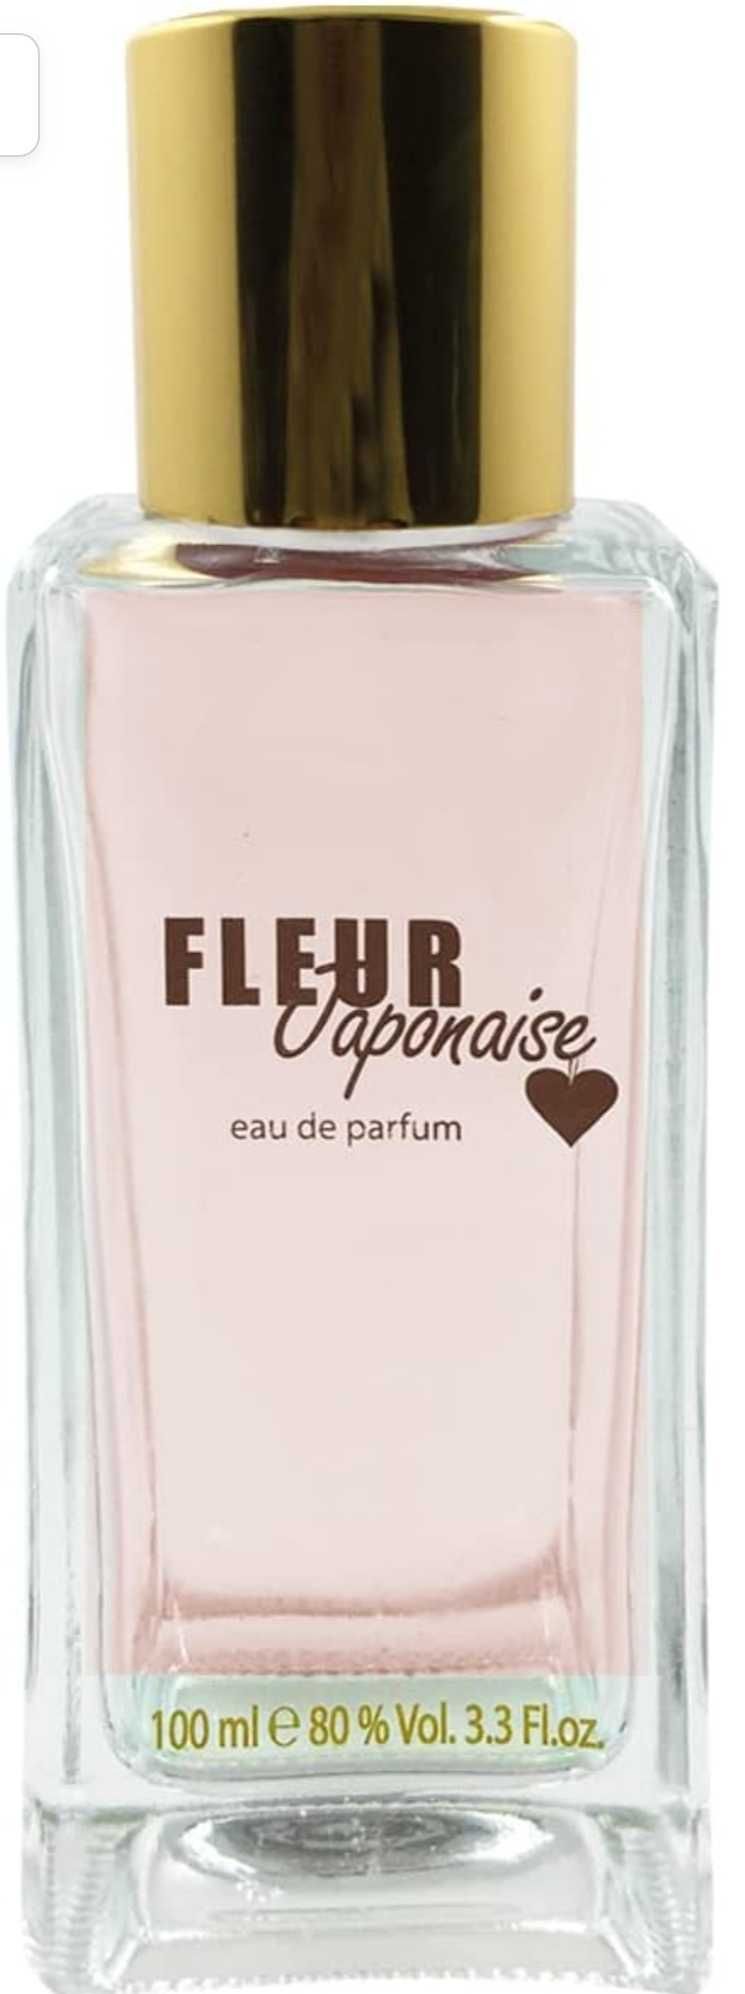 FLEUR JAPONAISE francuskie perfumy 100ml